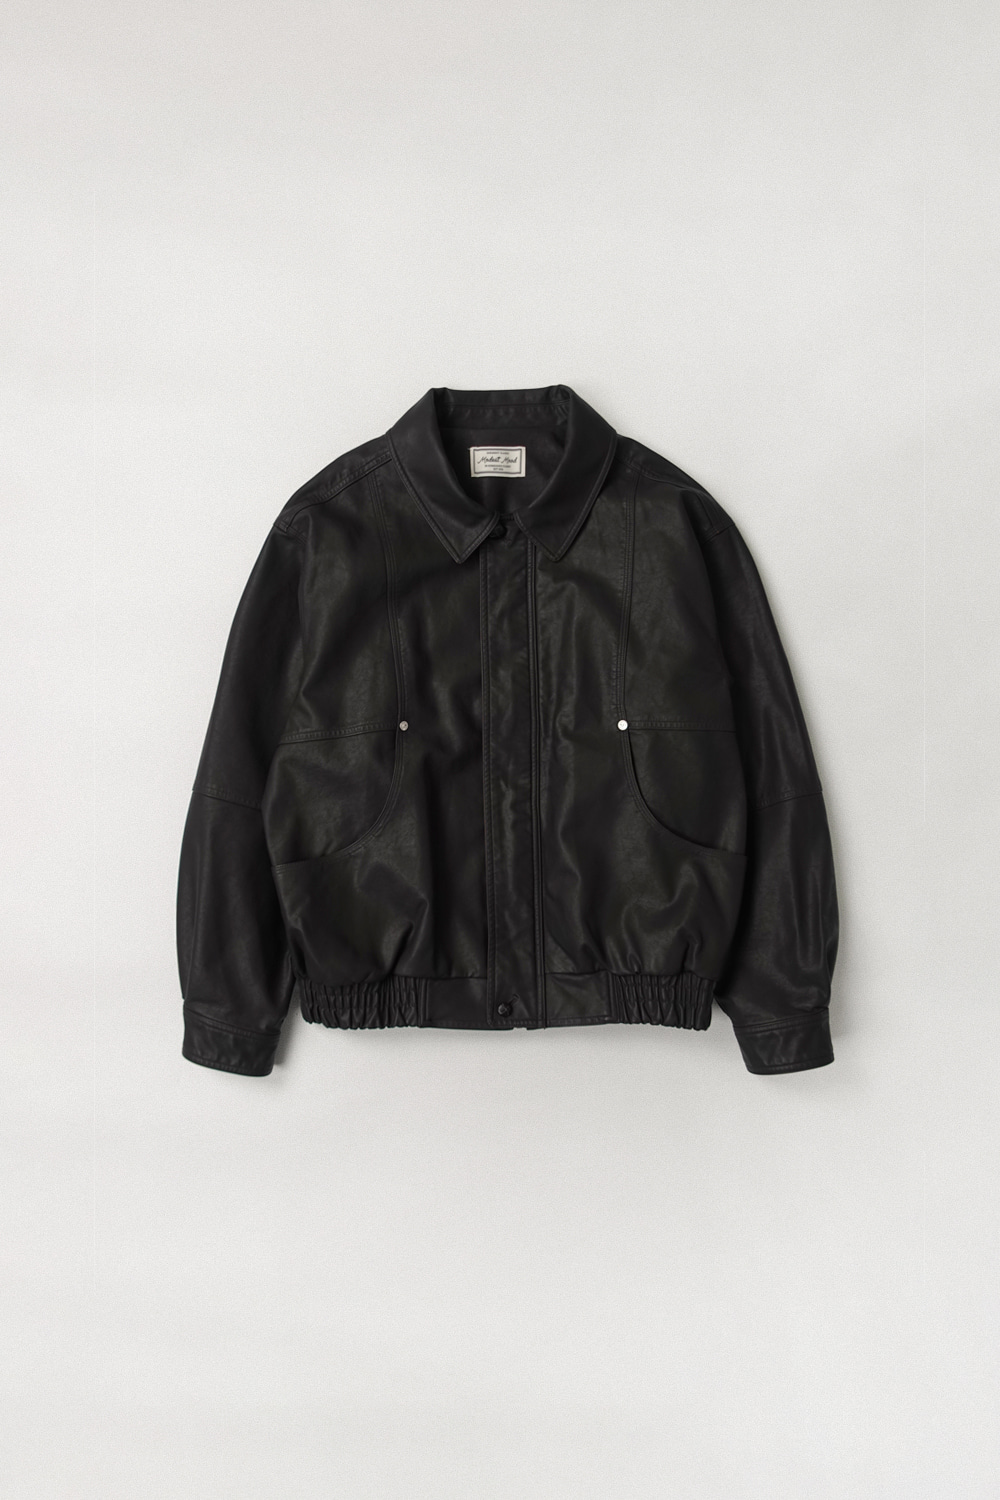 Tate Leather Jacket